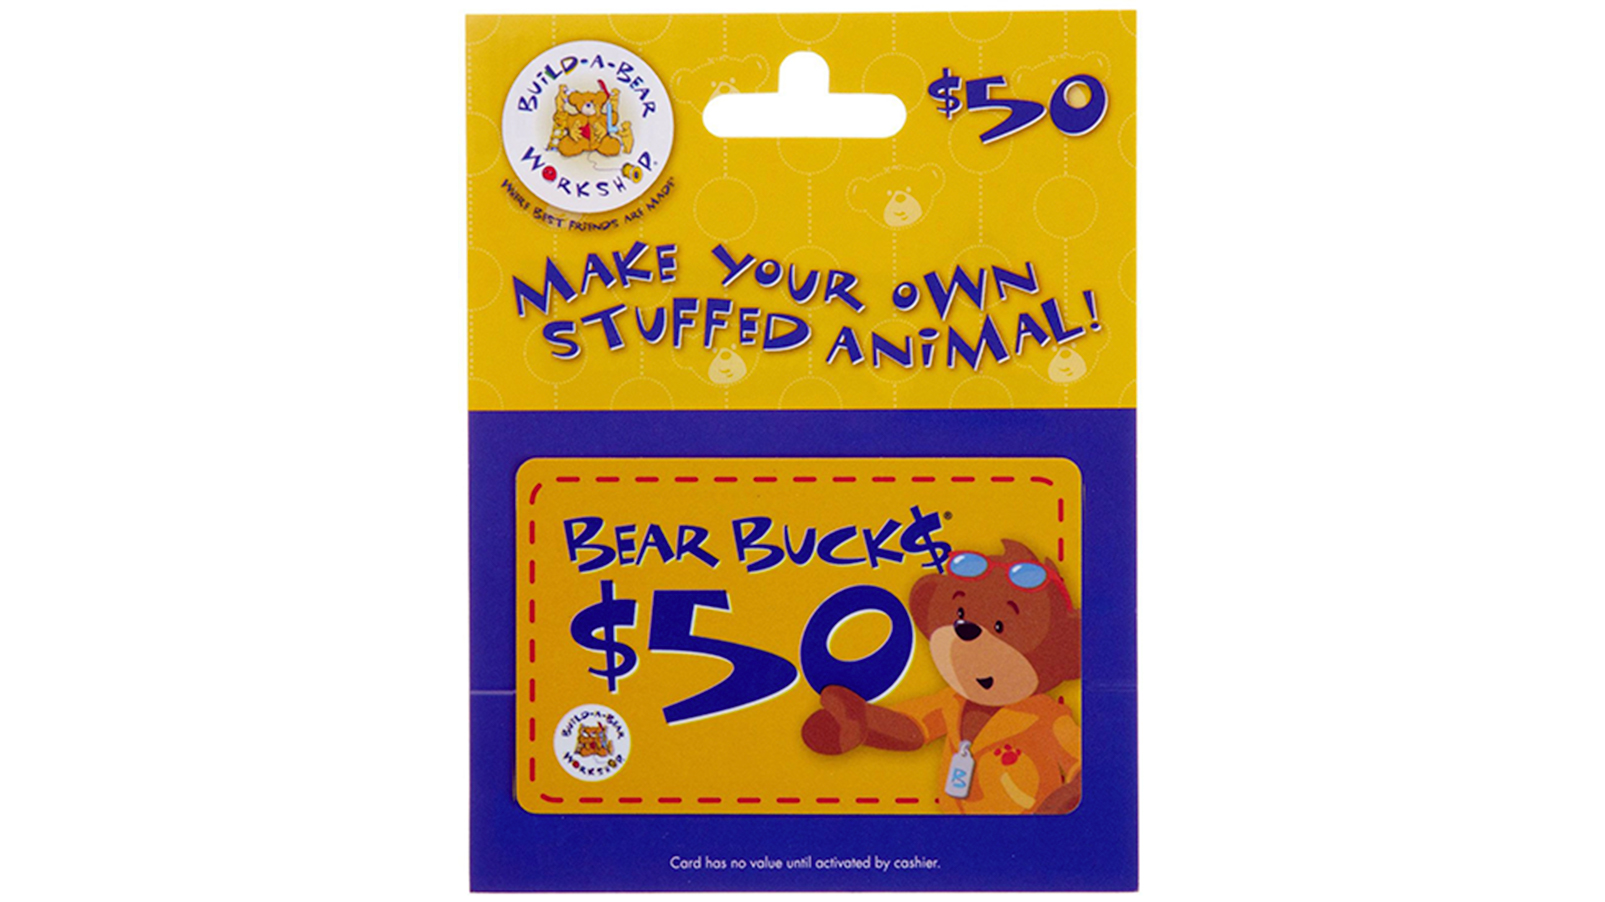 Build-A-Bear Workshop Gift Card